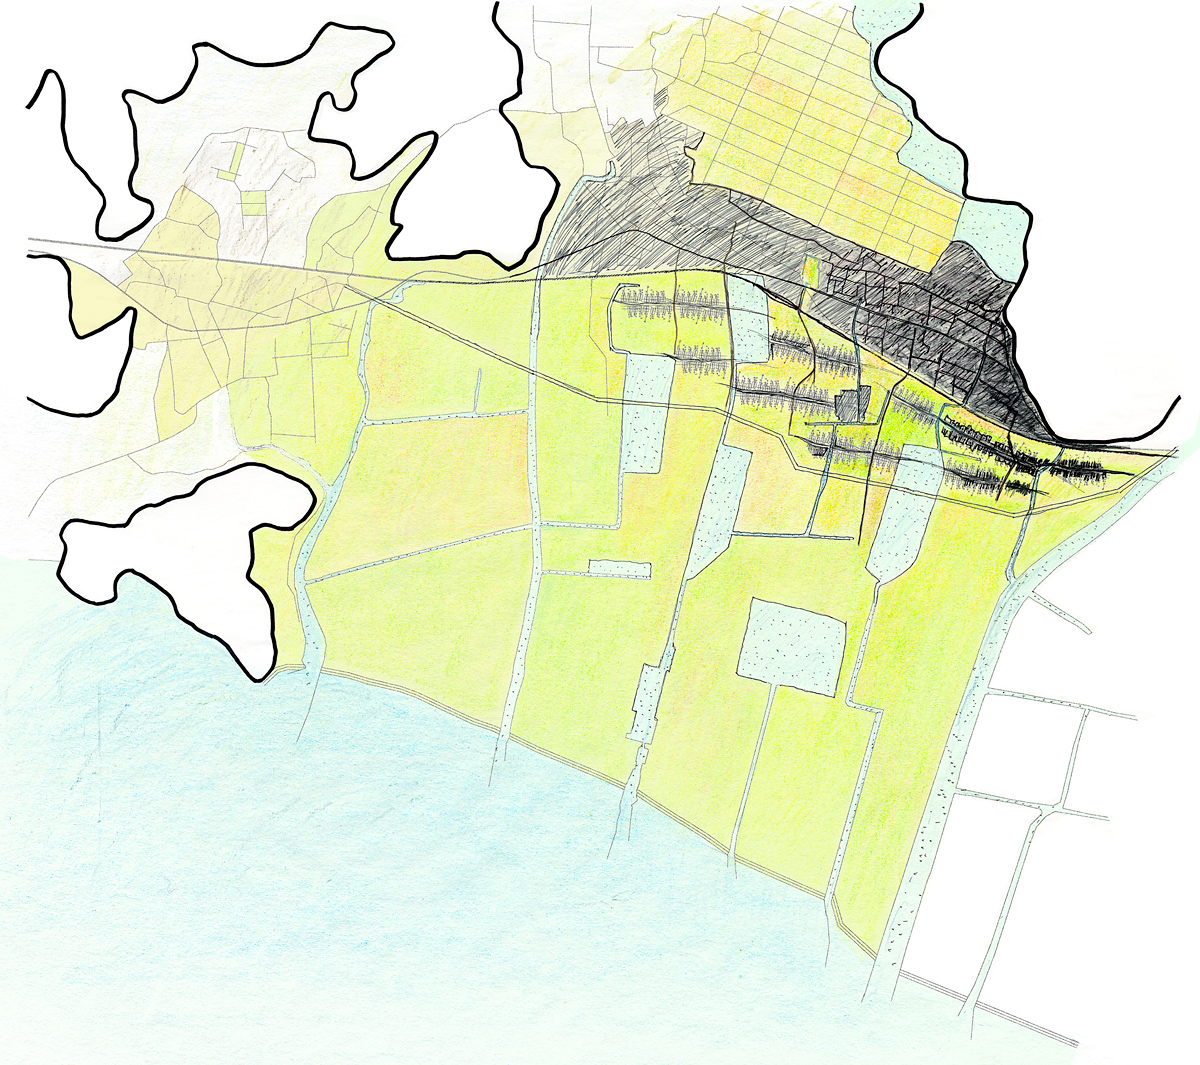 hand drawn regional design map/site plan, proposed urban development over former salt marshes, Oshio, Japan